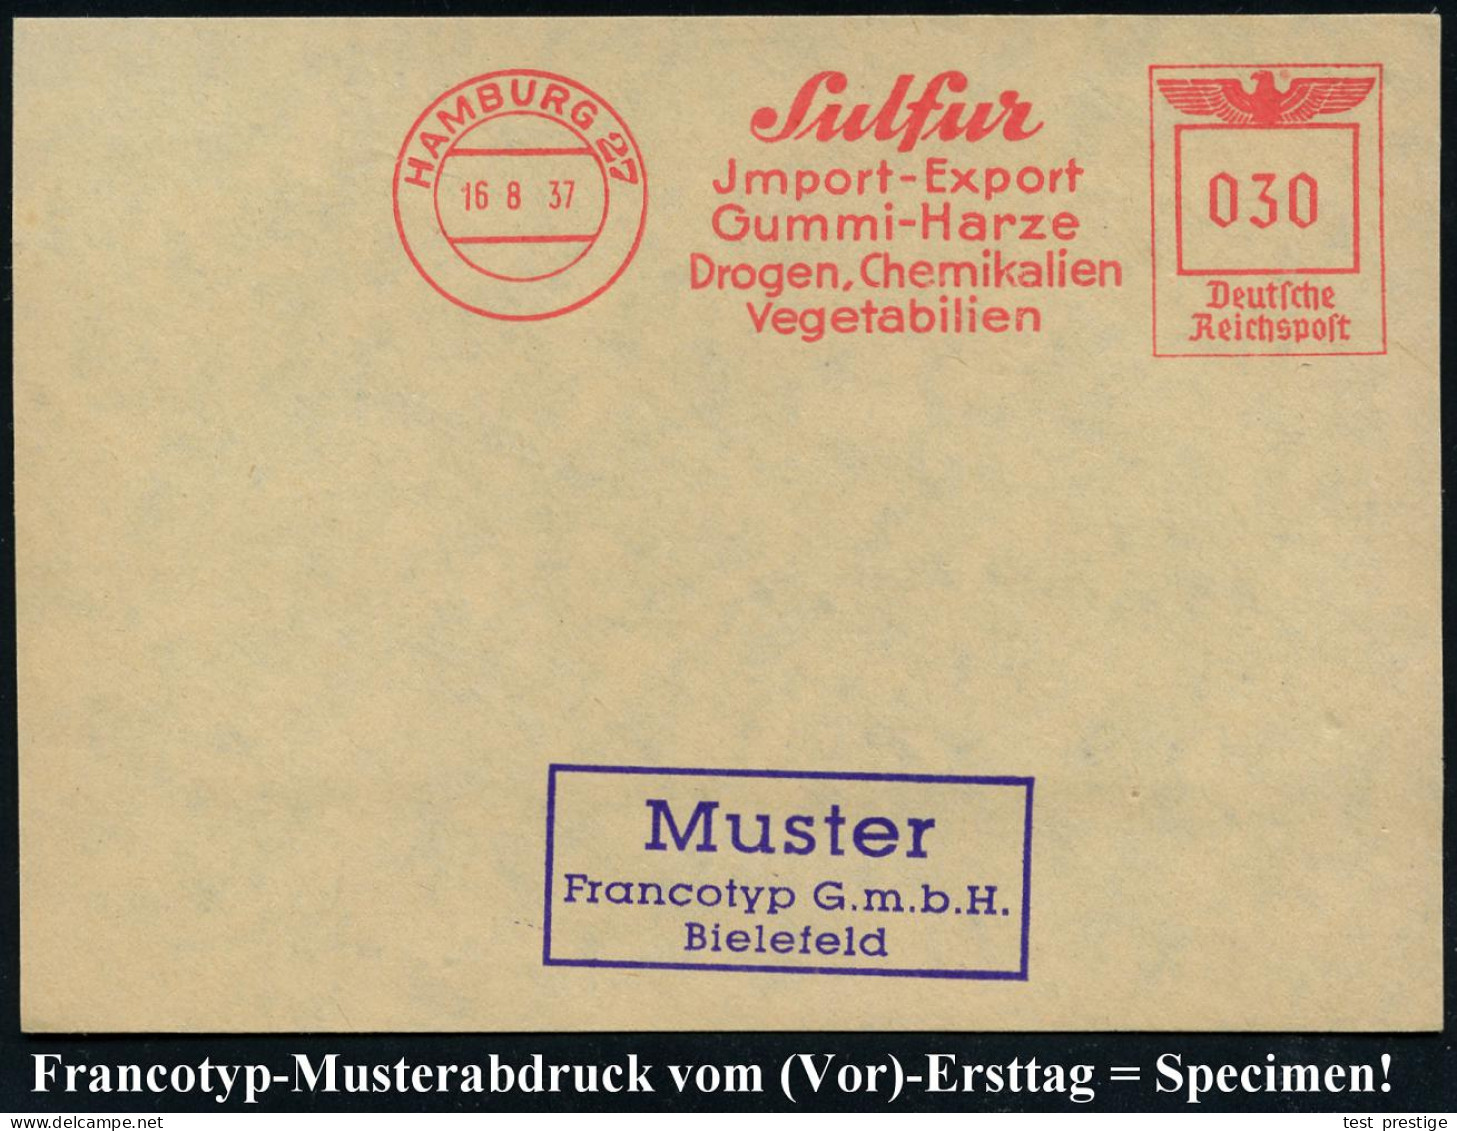 HAMBURG 27/ Sulfur/ Jmport-Export/ Gummi-Harze/ Drogen,Chemikalien.. 1937 (16.8.) AFS-Musterabdruck Francotyp "Reichsadl - Chimie